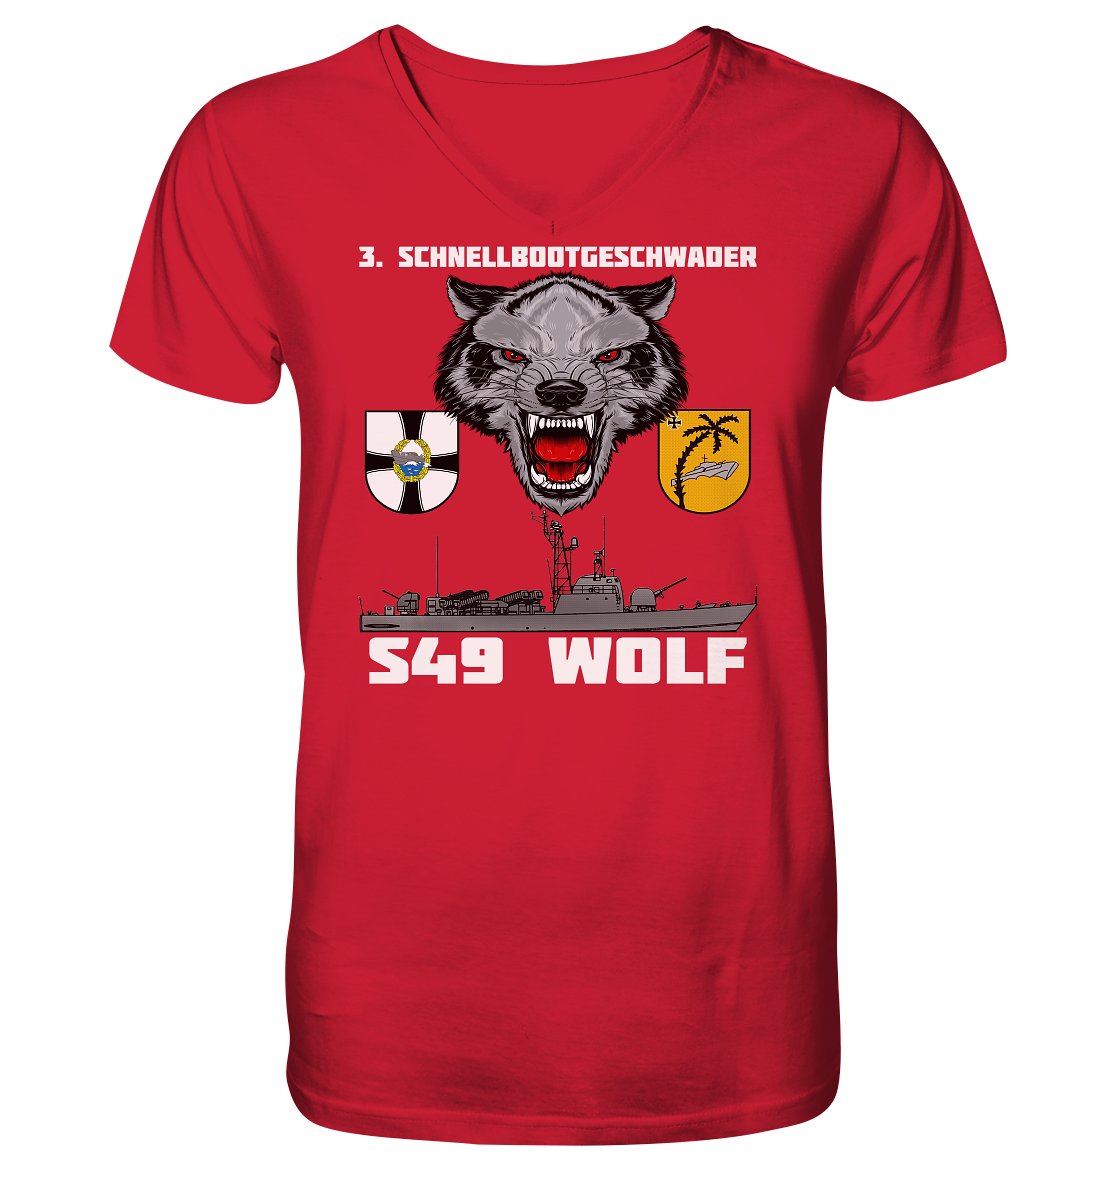 S49 WOLF - Mens Organic V-Neck Shirt